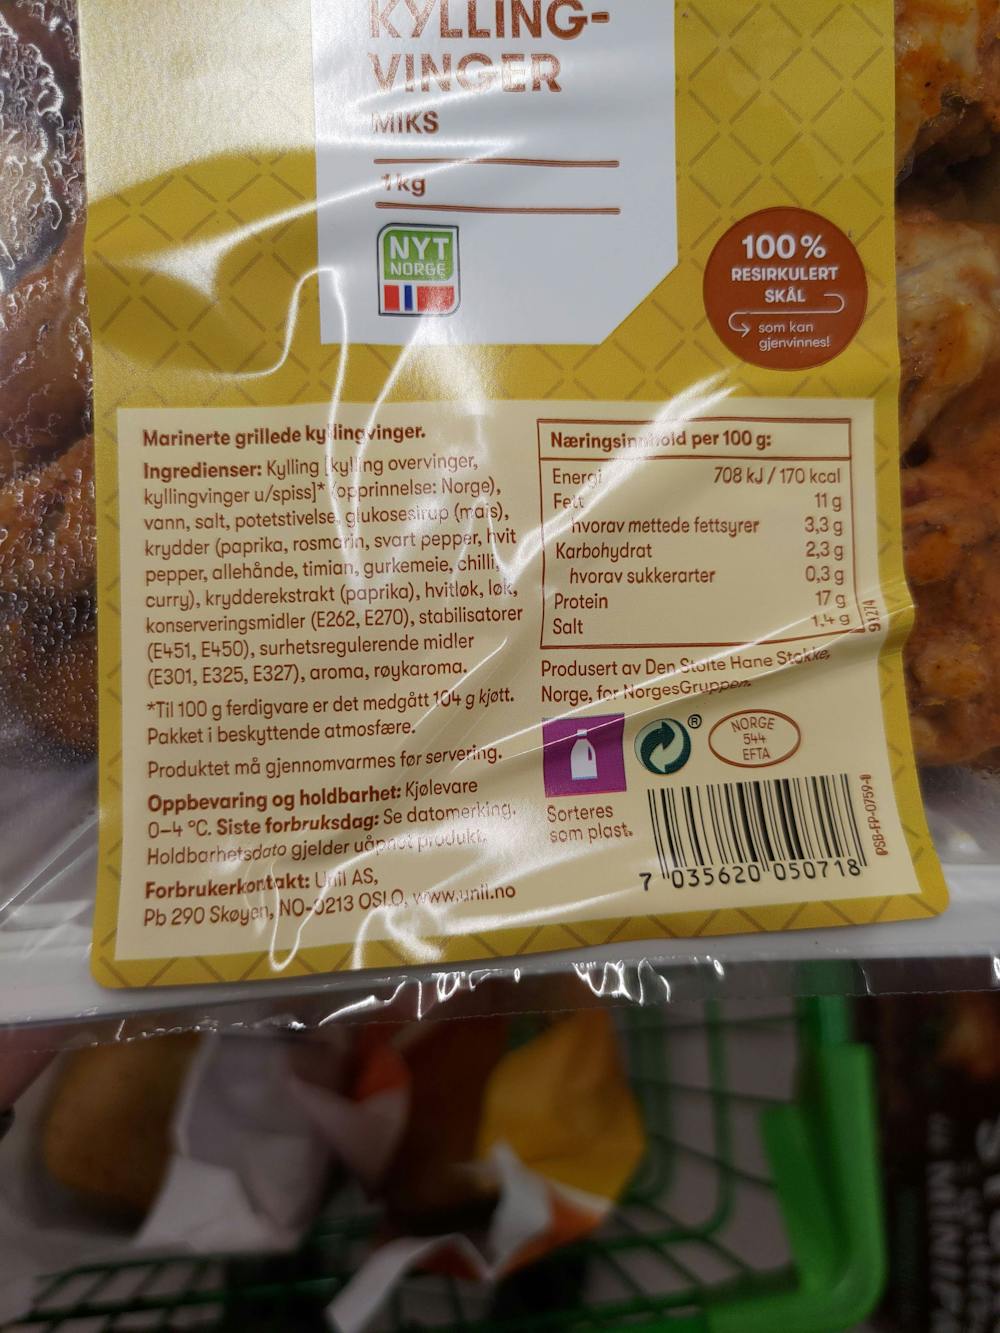 Ingrediensliste - Grillede kyllingvinger, First price